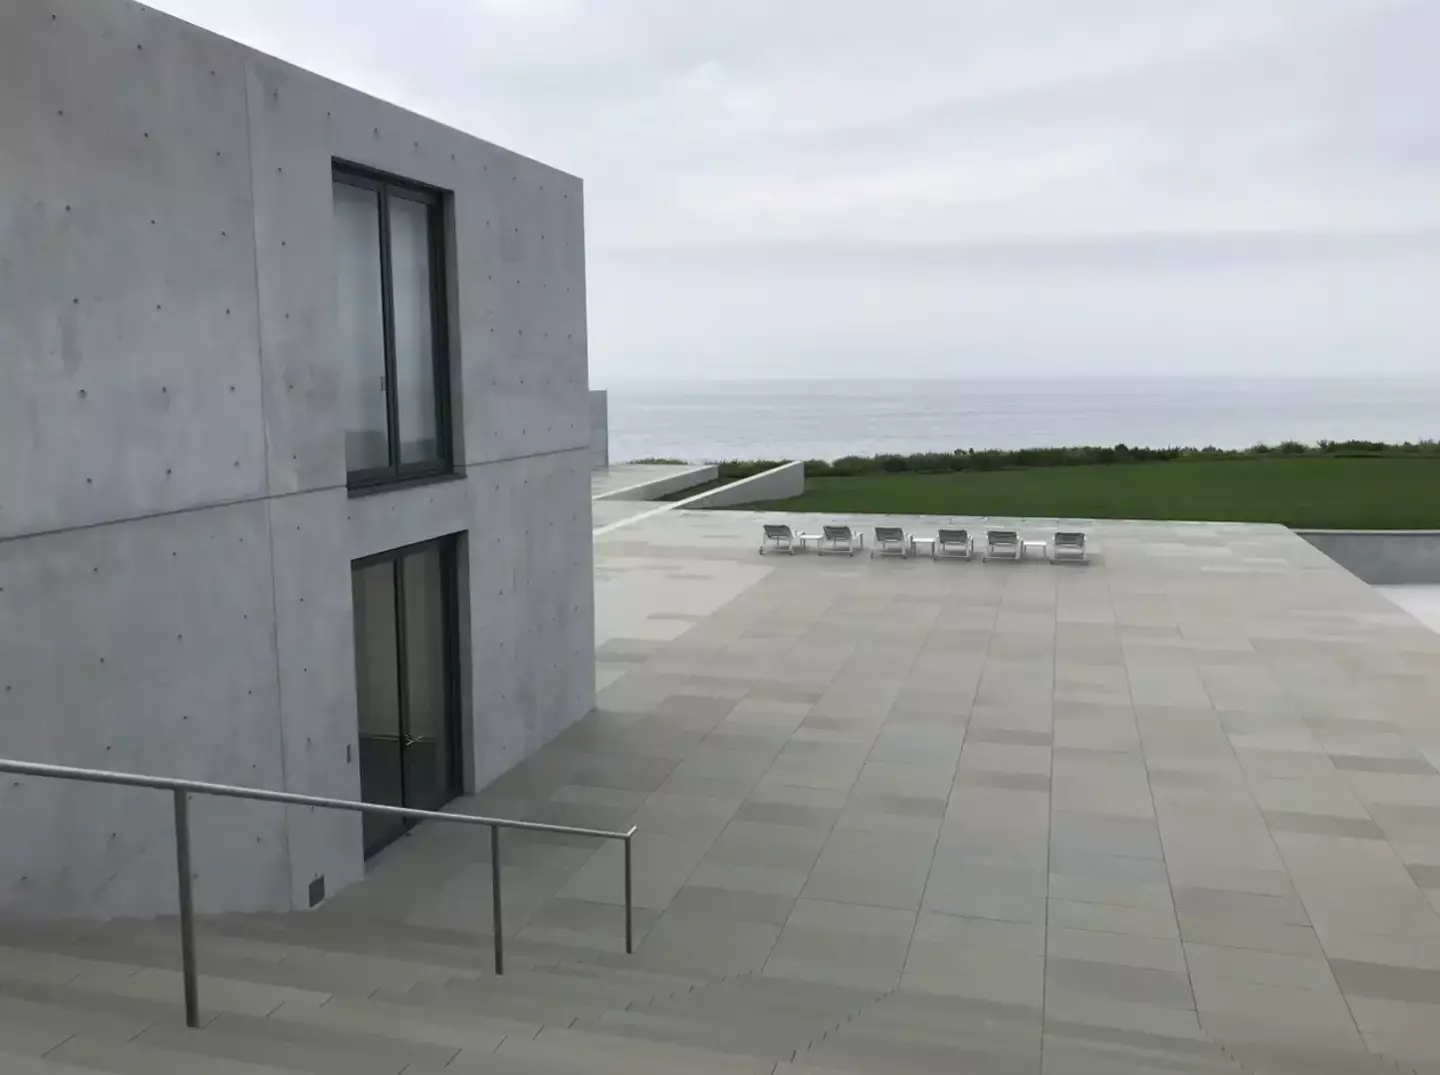 The house was designed by Tadao Ando.